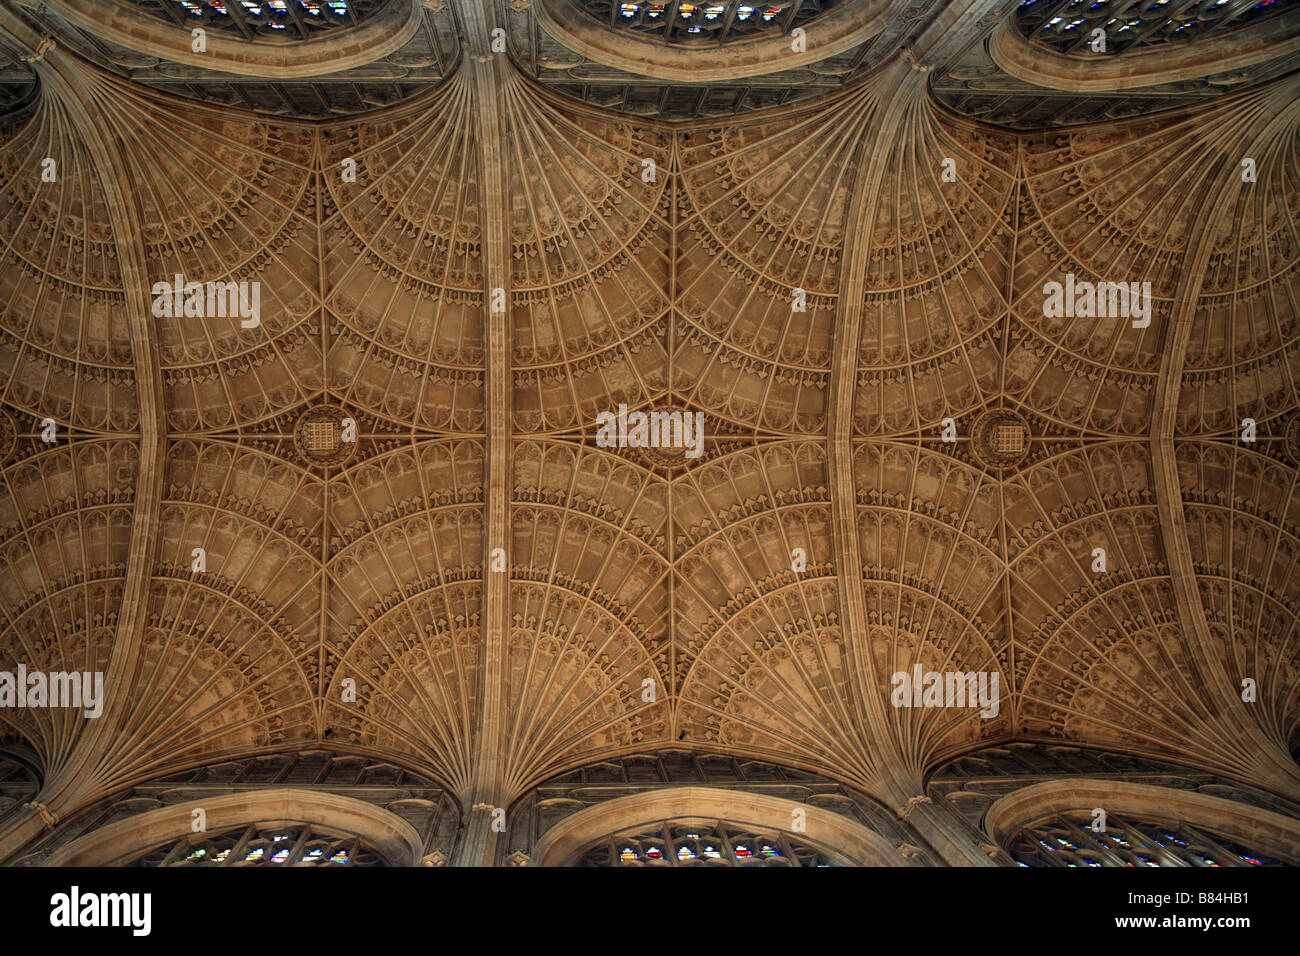 'Kings College Chapel' ceiling detail. Cambridge University, Cambridge, UK. Stock Photo